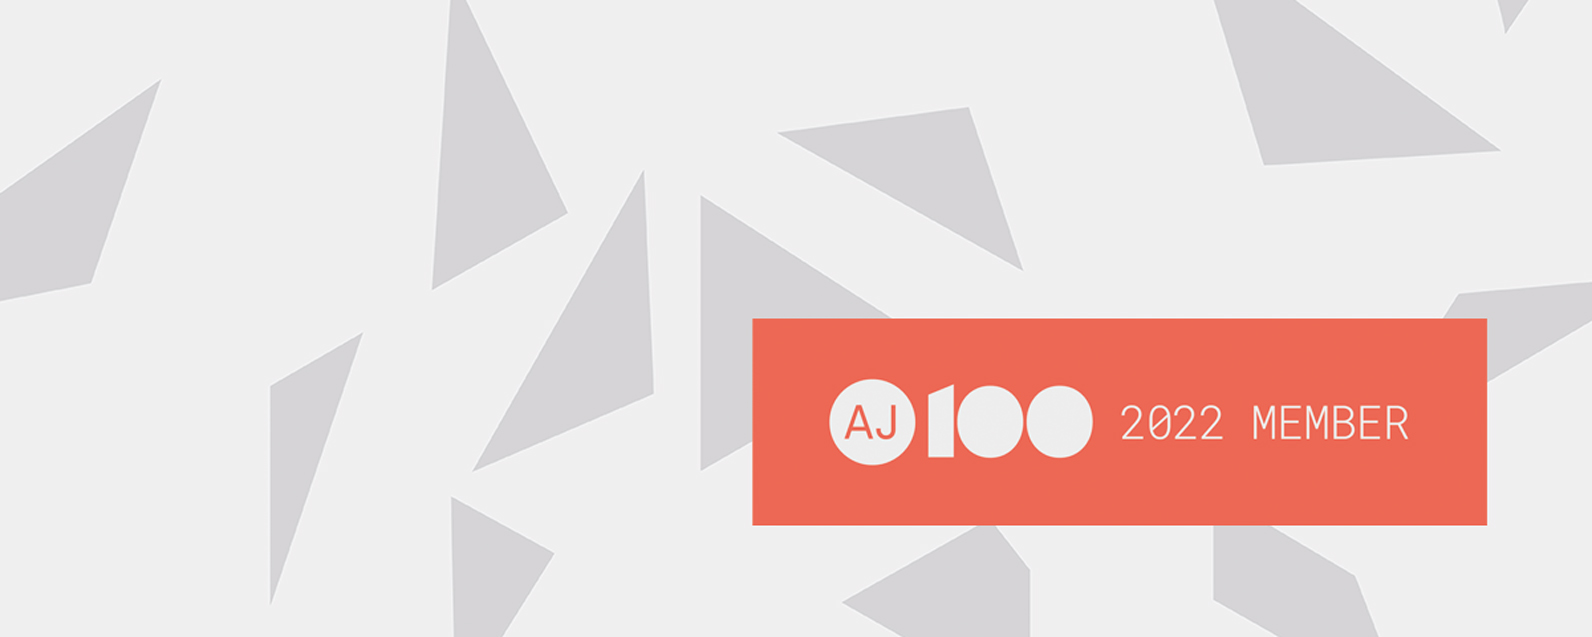 LSI-Architects-AJ100-2022